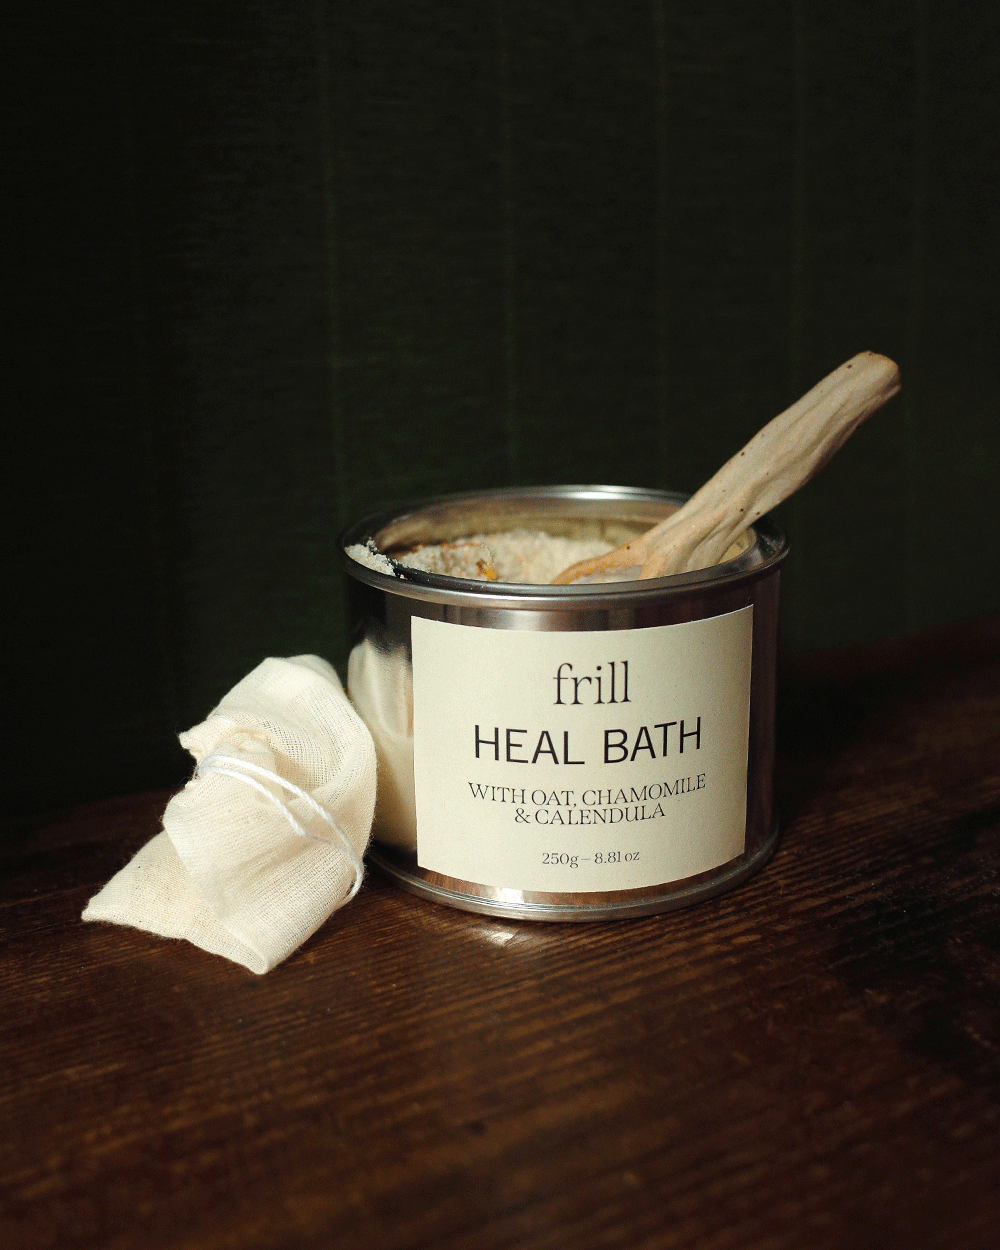 Frill Heal Bath with Oat, Chamomile & Calendula